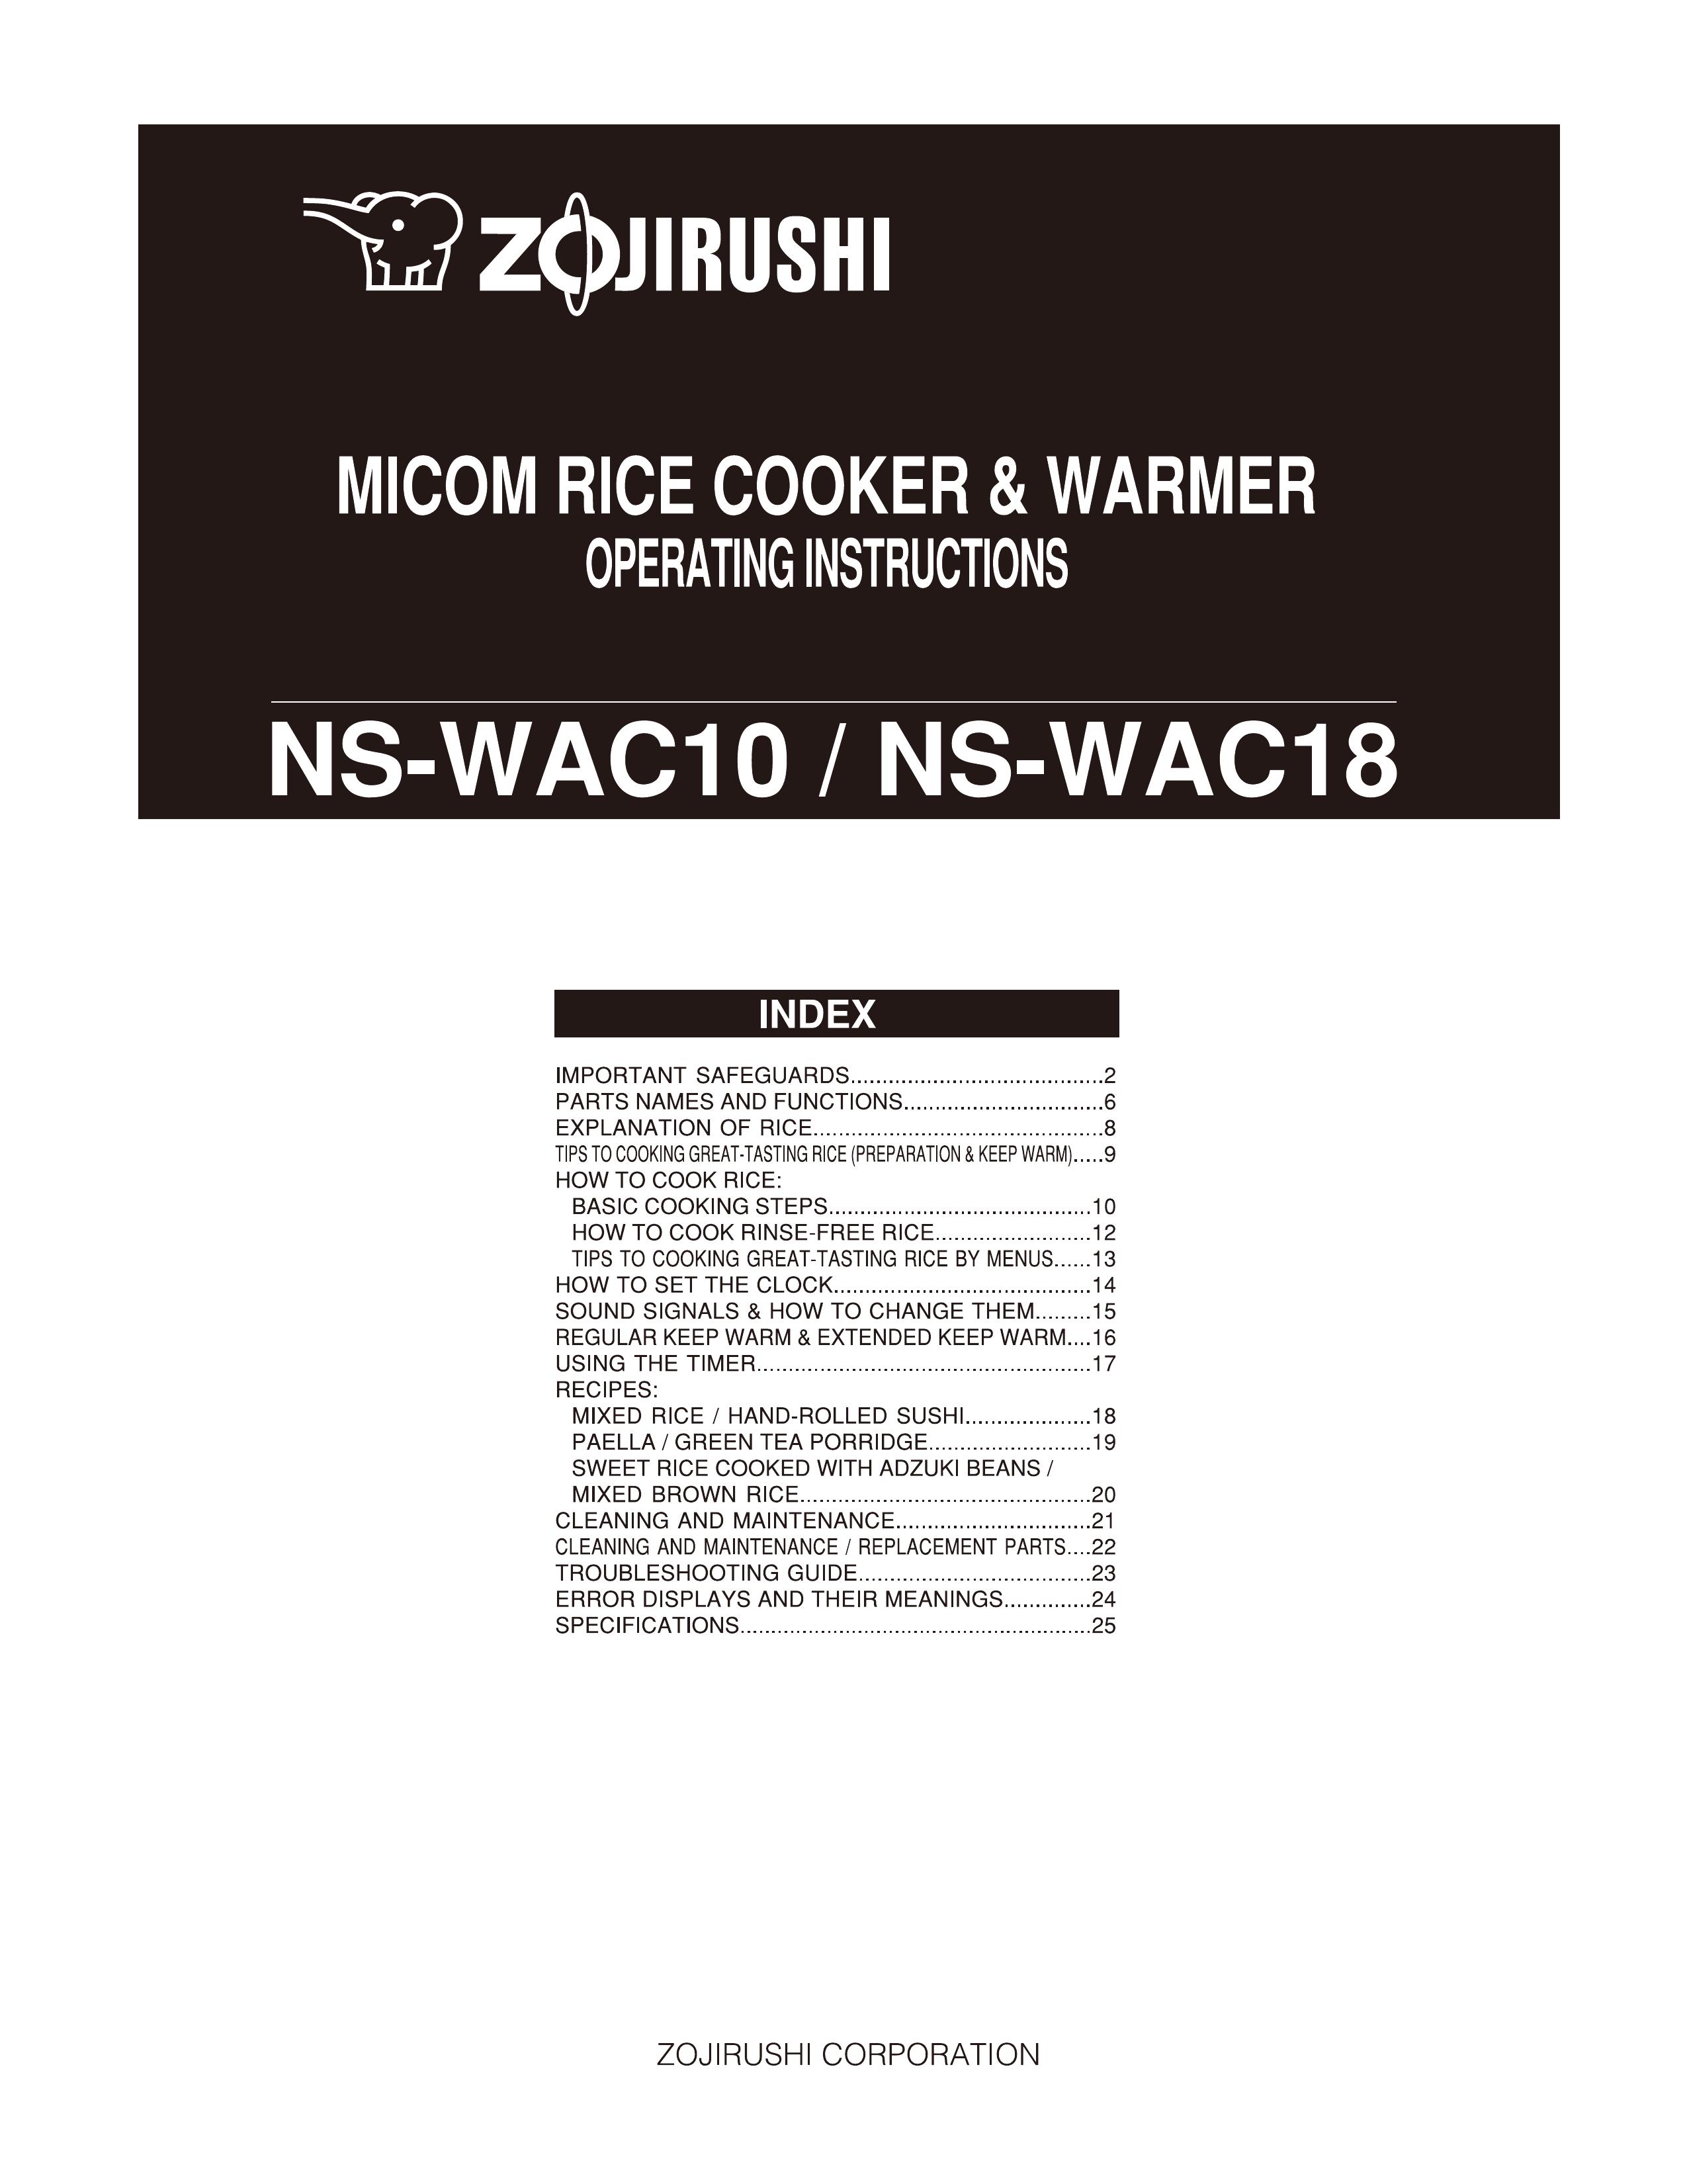 Zojirushi NS-WAC10 Rice Cooker User Manual